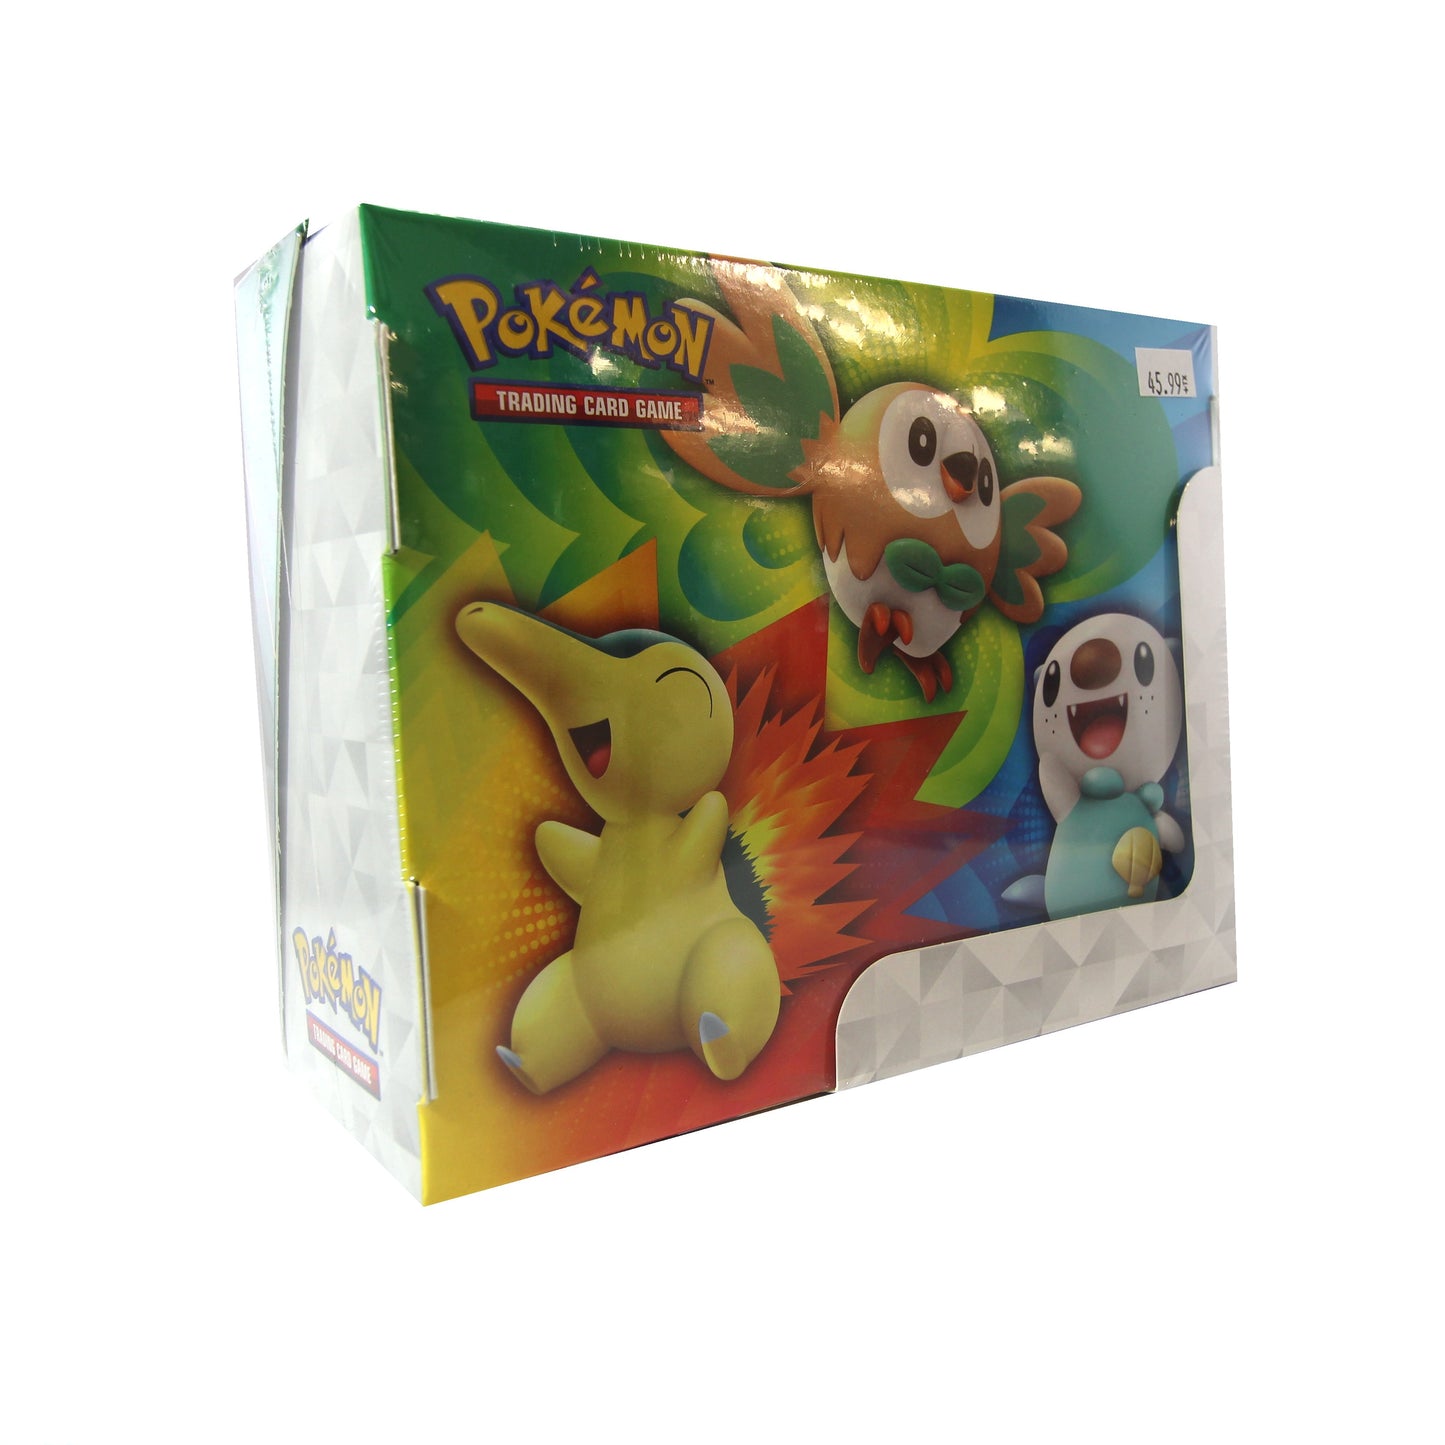 Pokémon Treasure Chest Cardboard Box